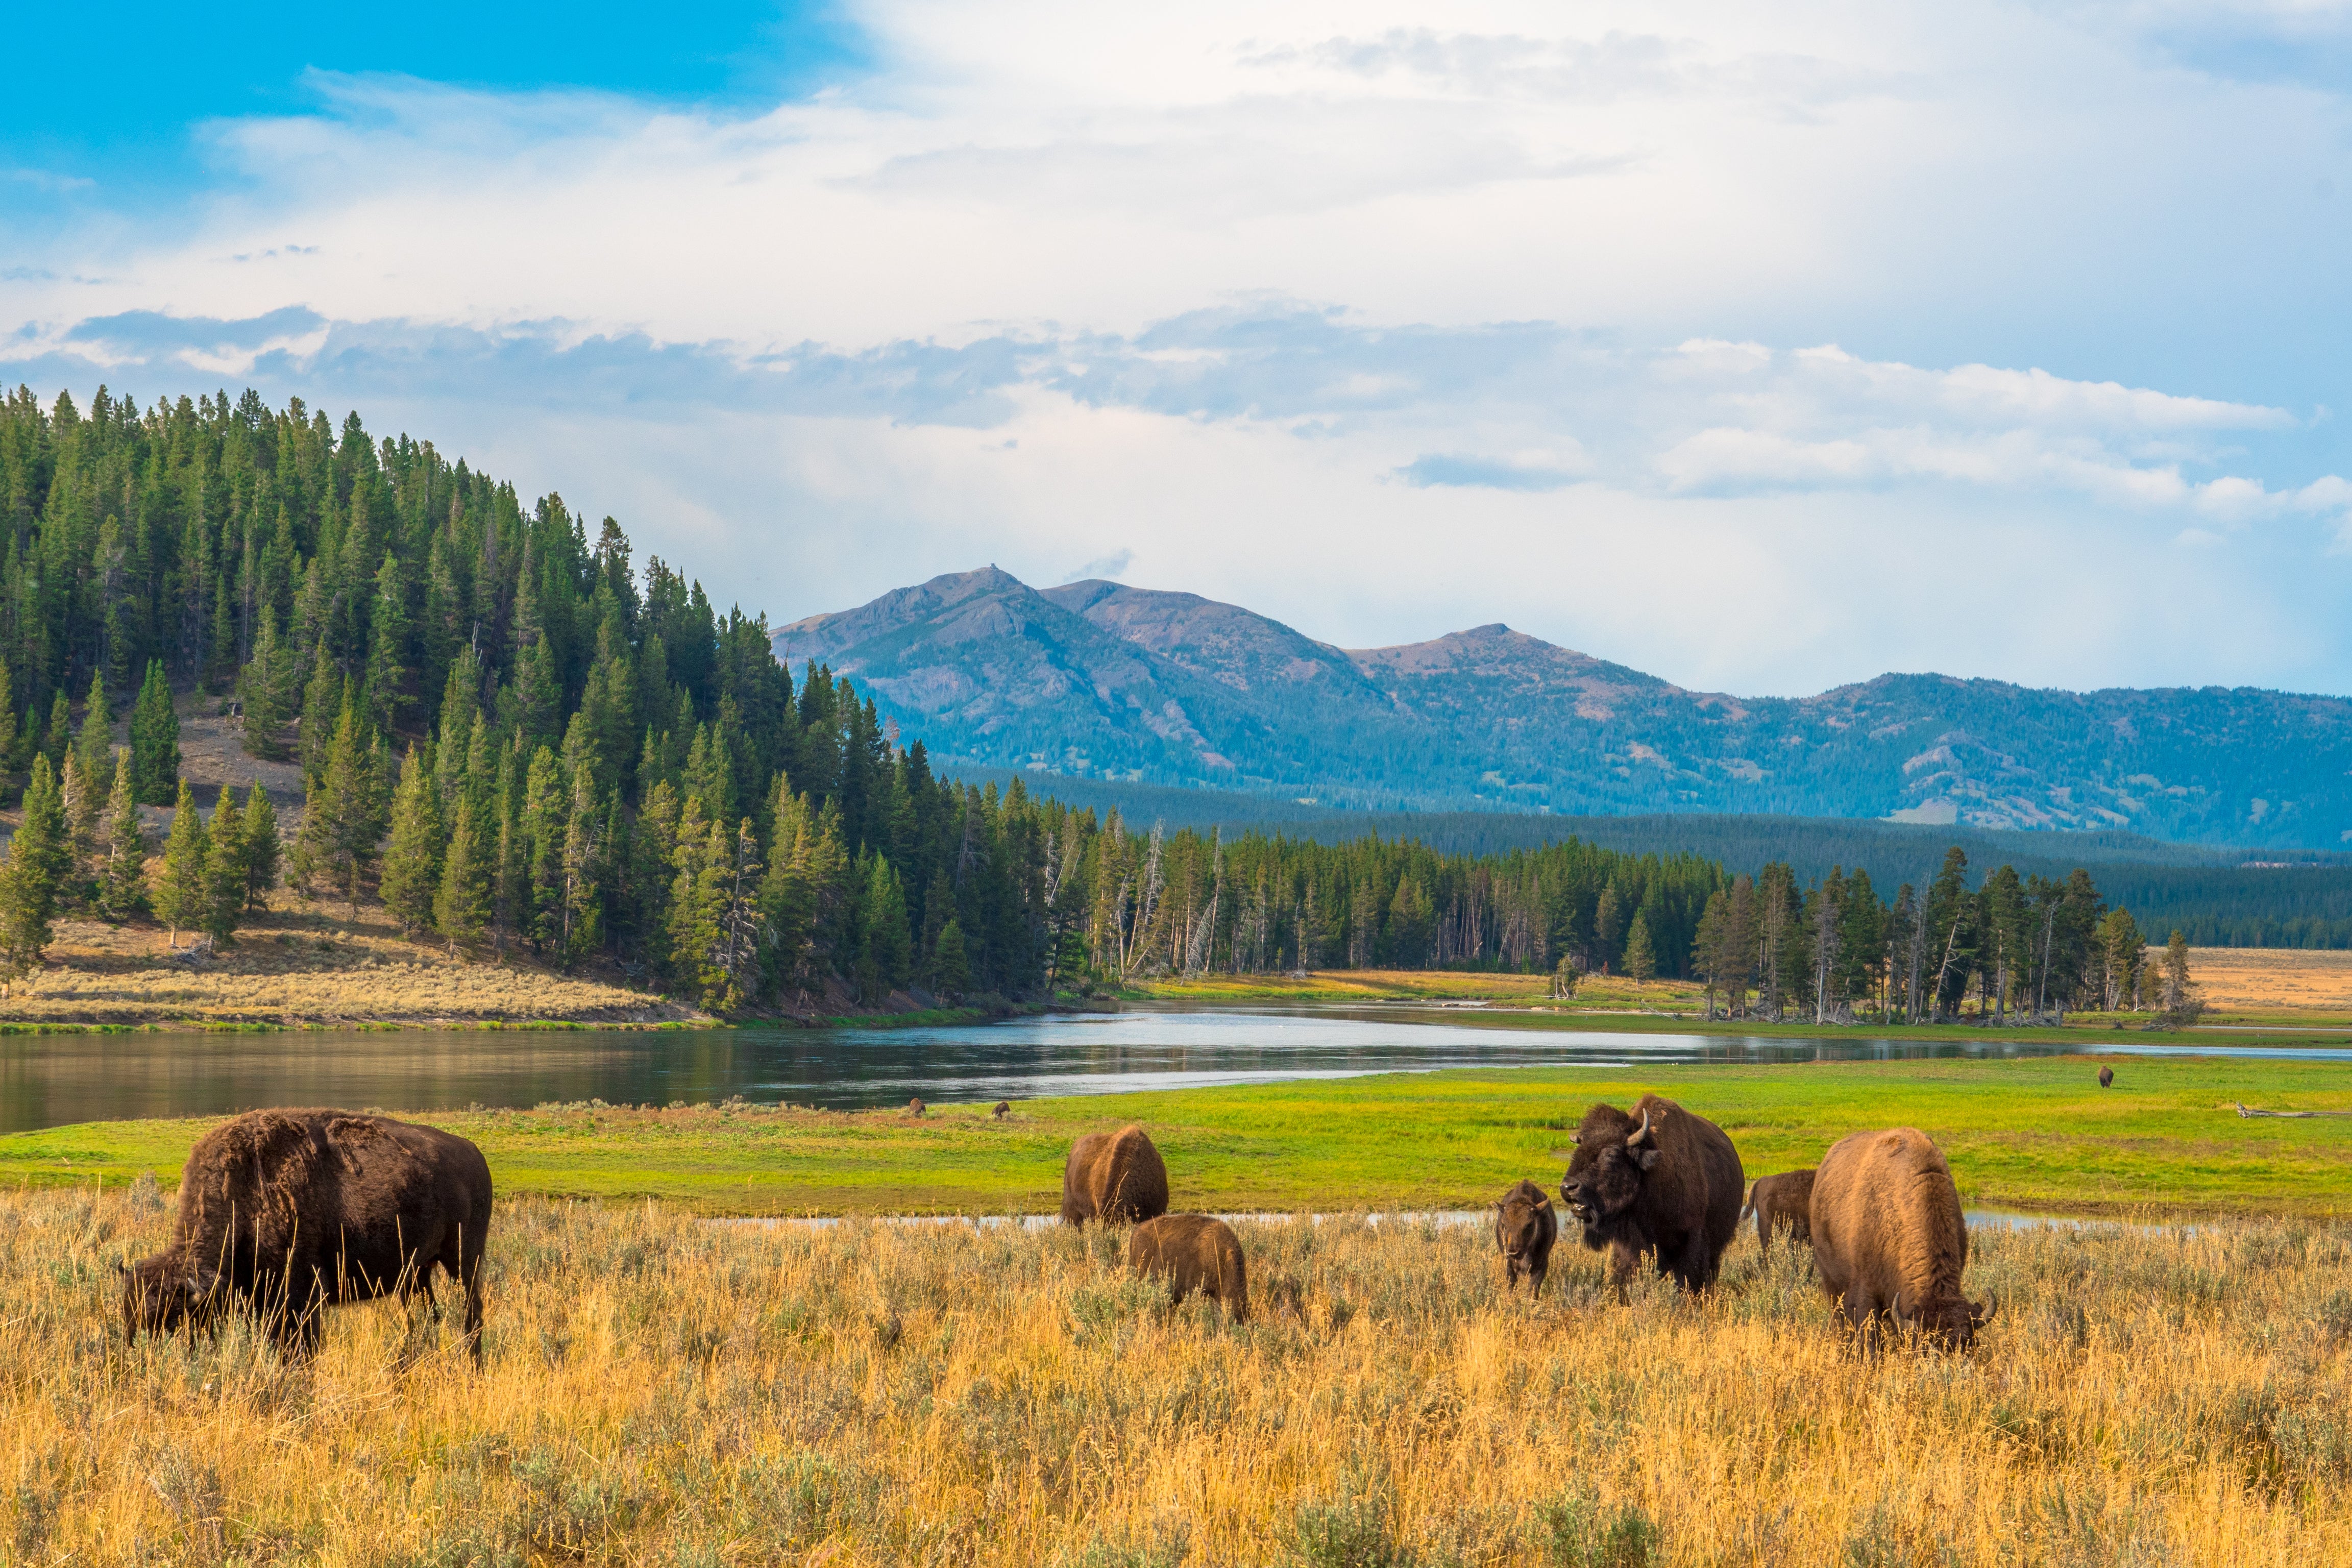 Yellowstone’s 2.2 million acres sprawl across state lines